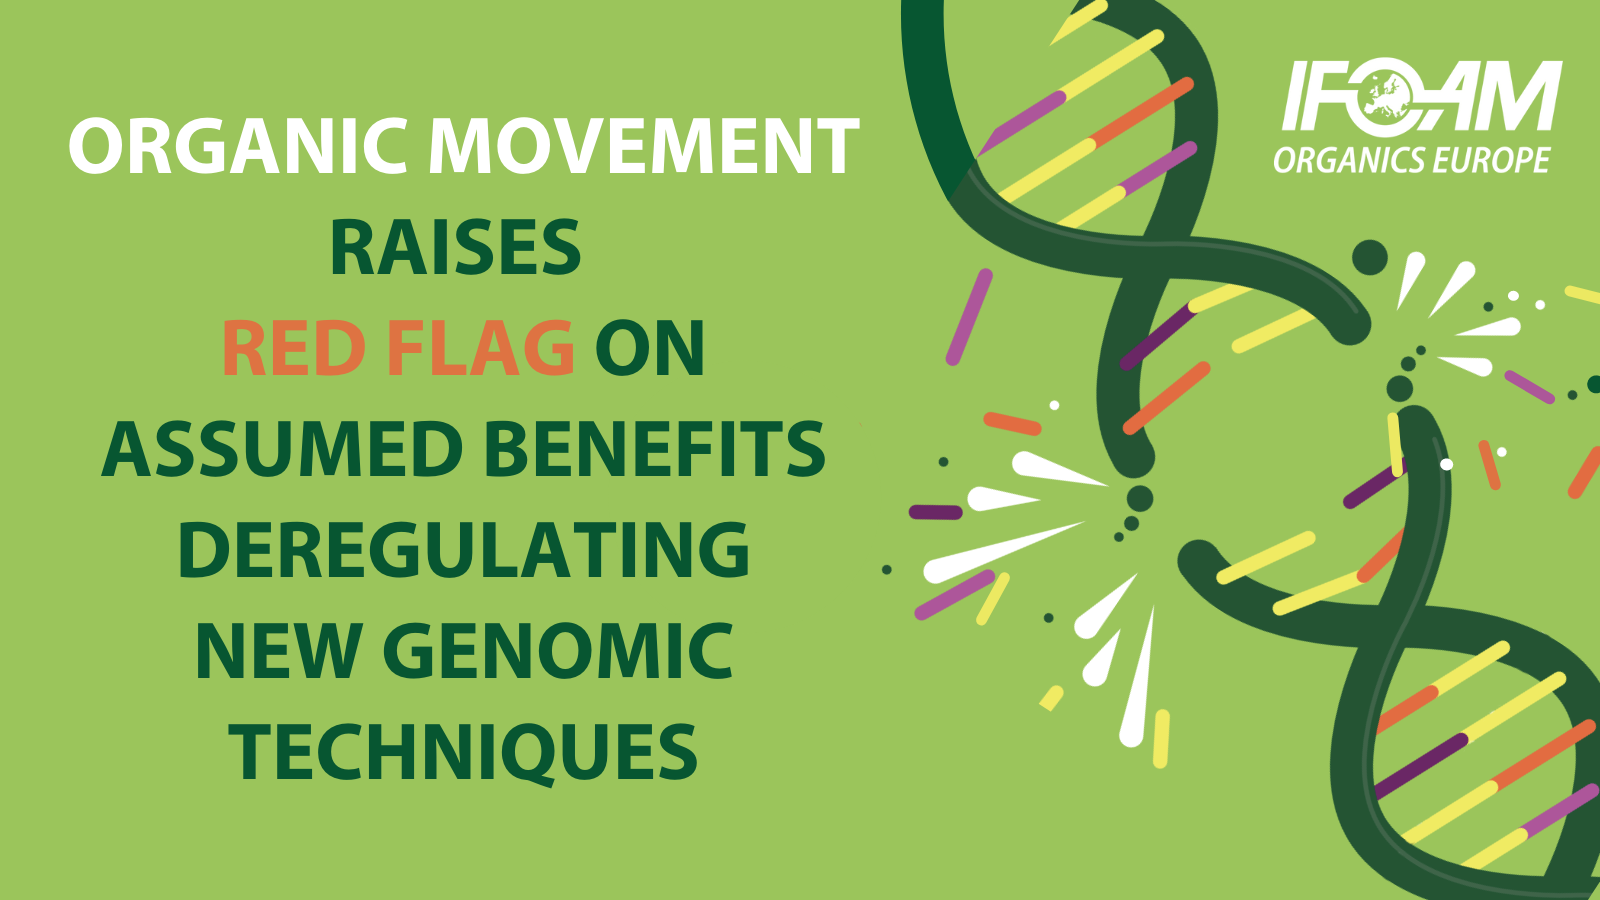 Organic movement raises red flag on assumed benefits of deregulating new genomic techniques